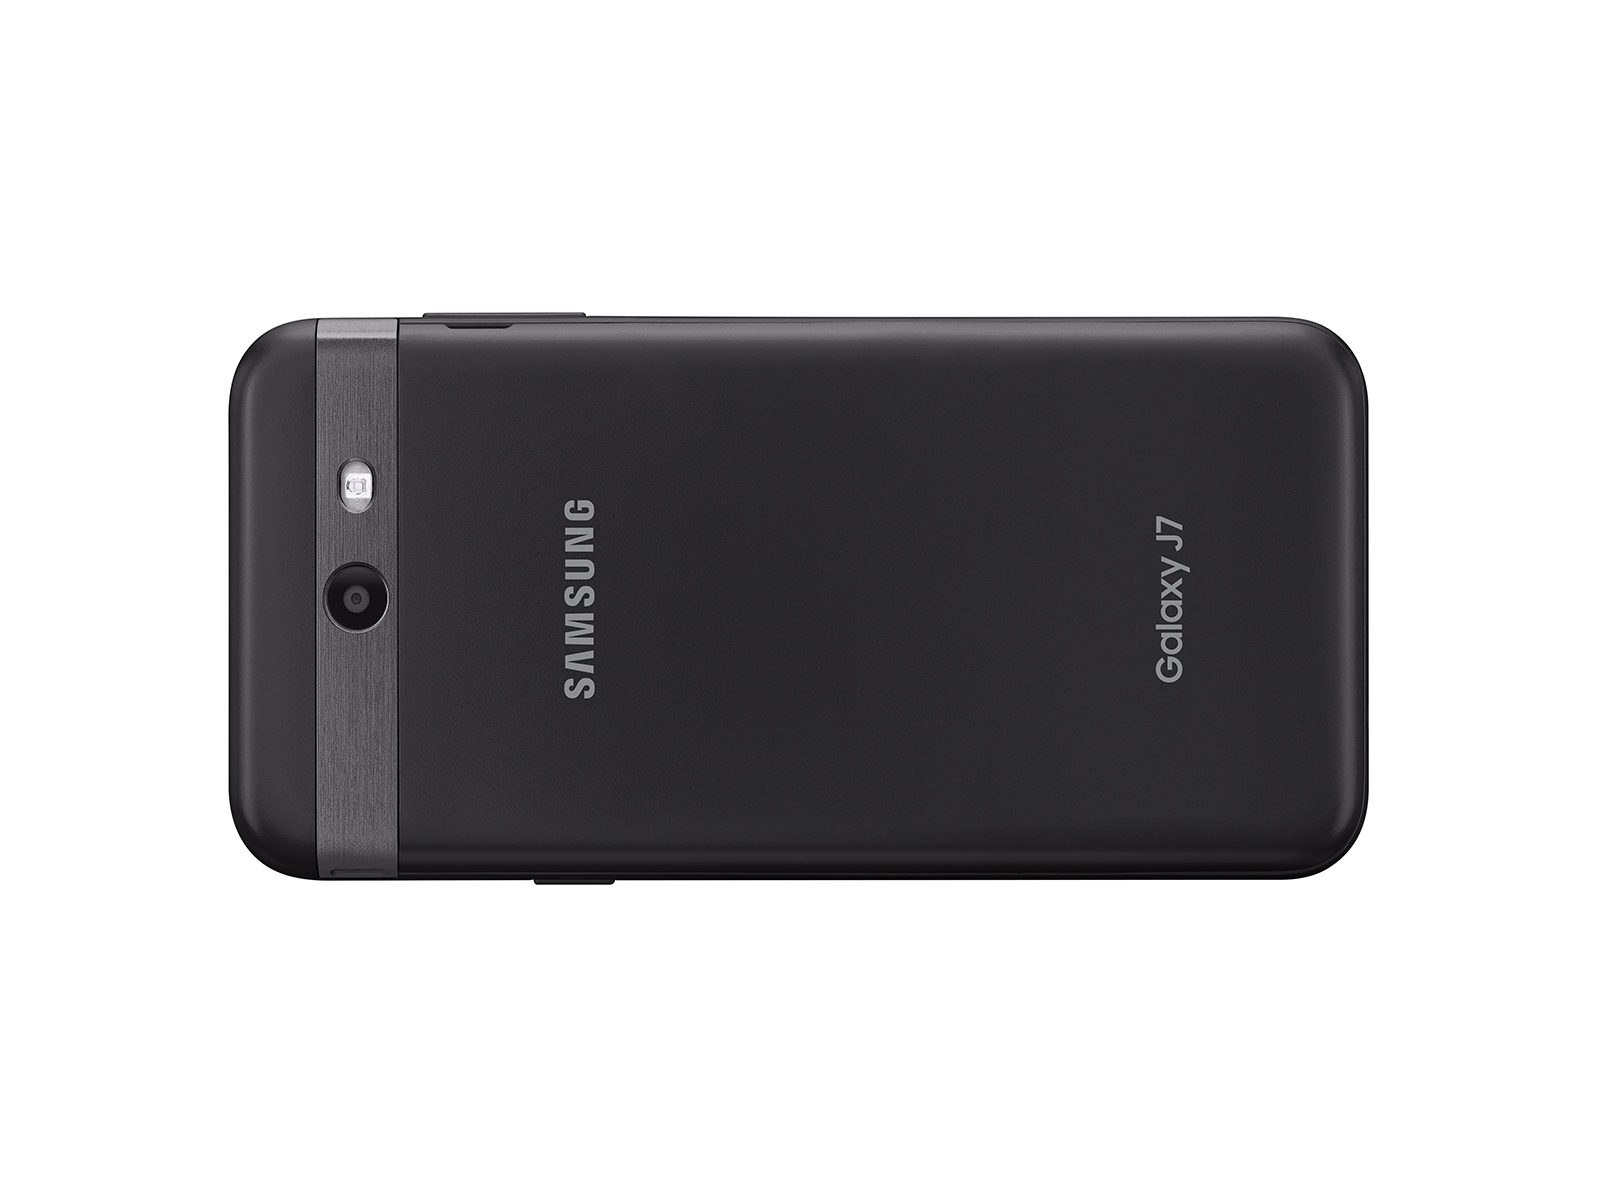 Majestuoso Oculto Aplastar Samsung Galaxy J7 16GB Unlocked Black Phones - SM-J727UZKAXAA | Samsung US